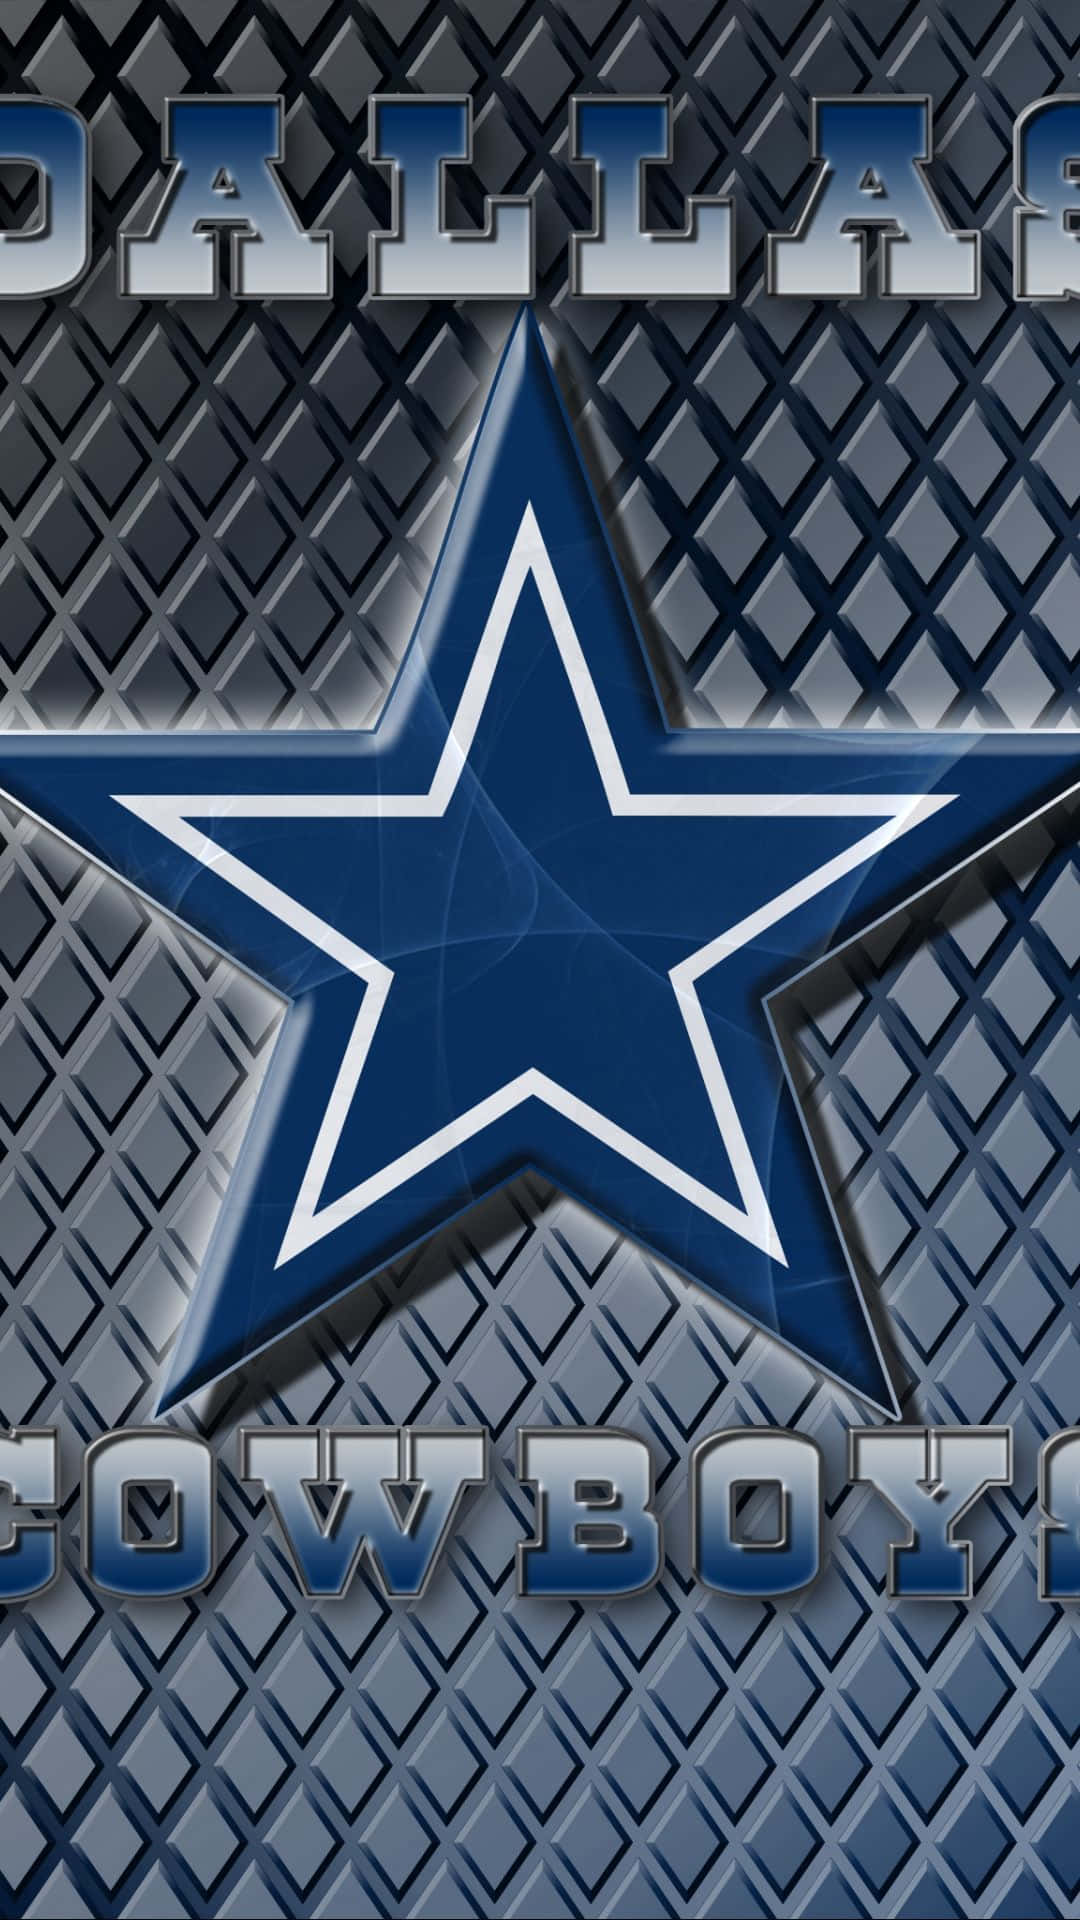 Dallas Cowboys Phone Diamonds Wallpaper